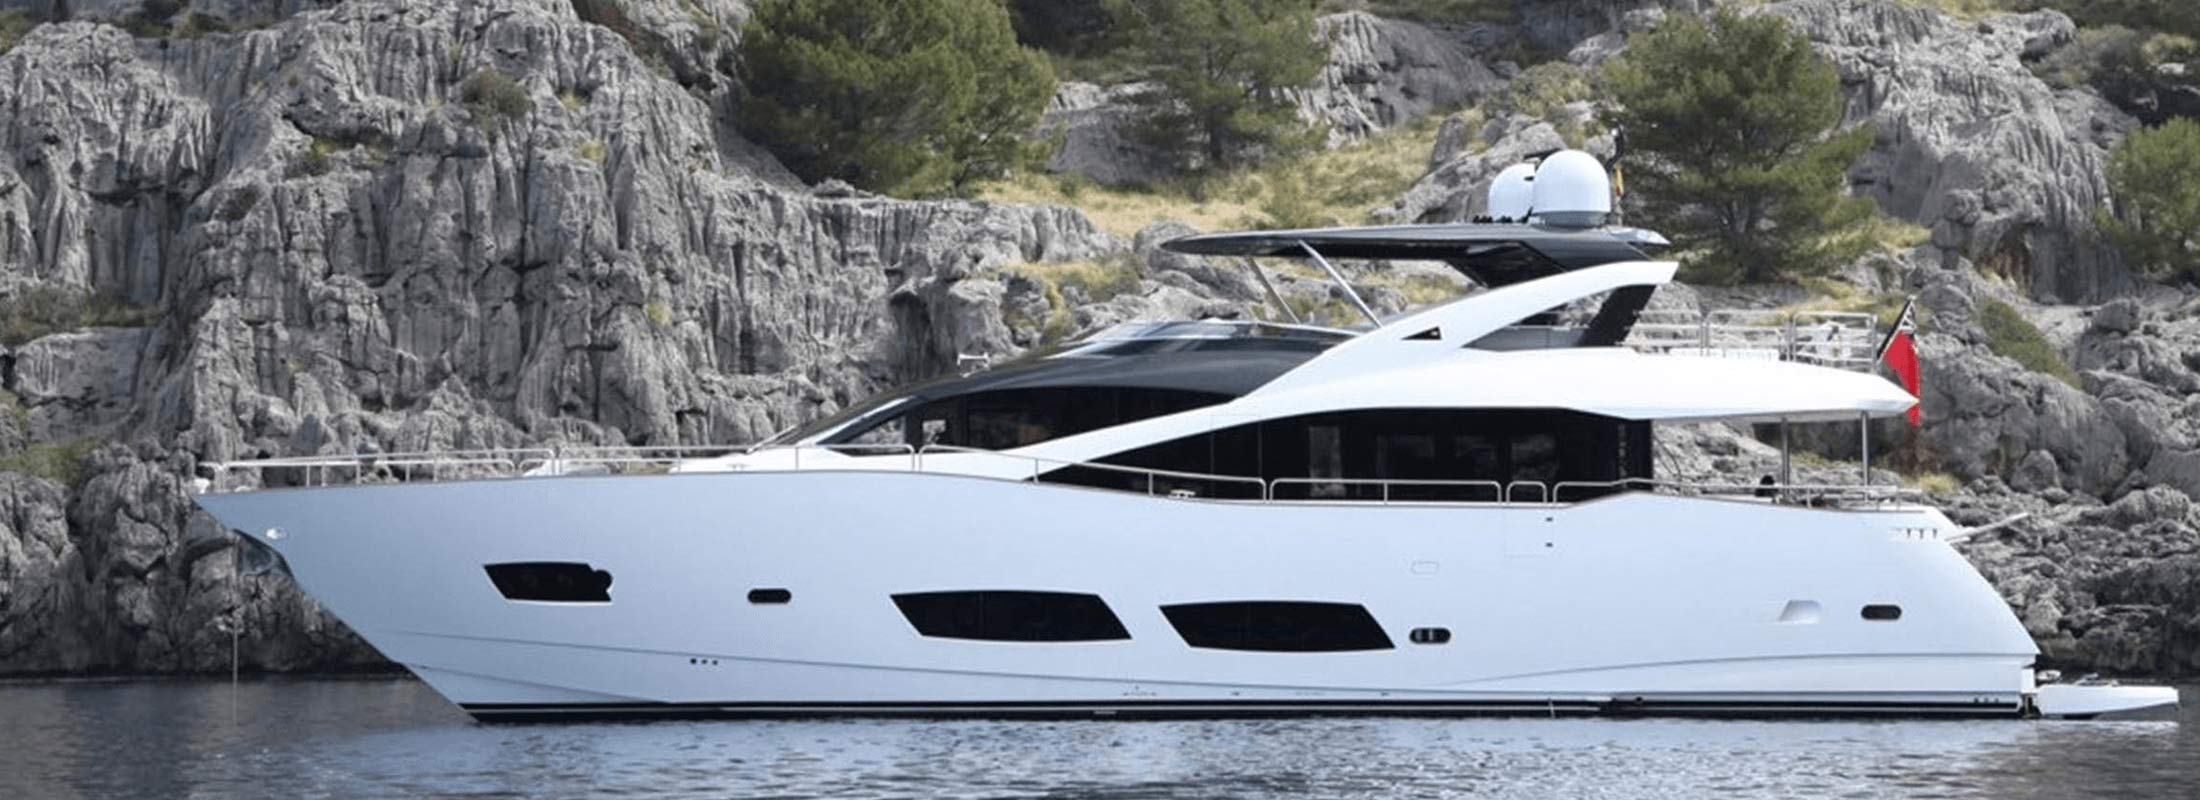 Aqua Libra Motor Yacht for Charter Mediterranean slider 2